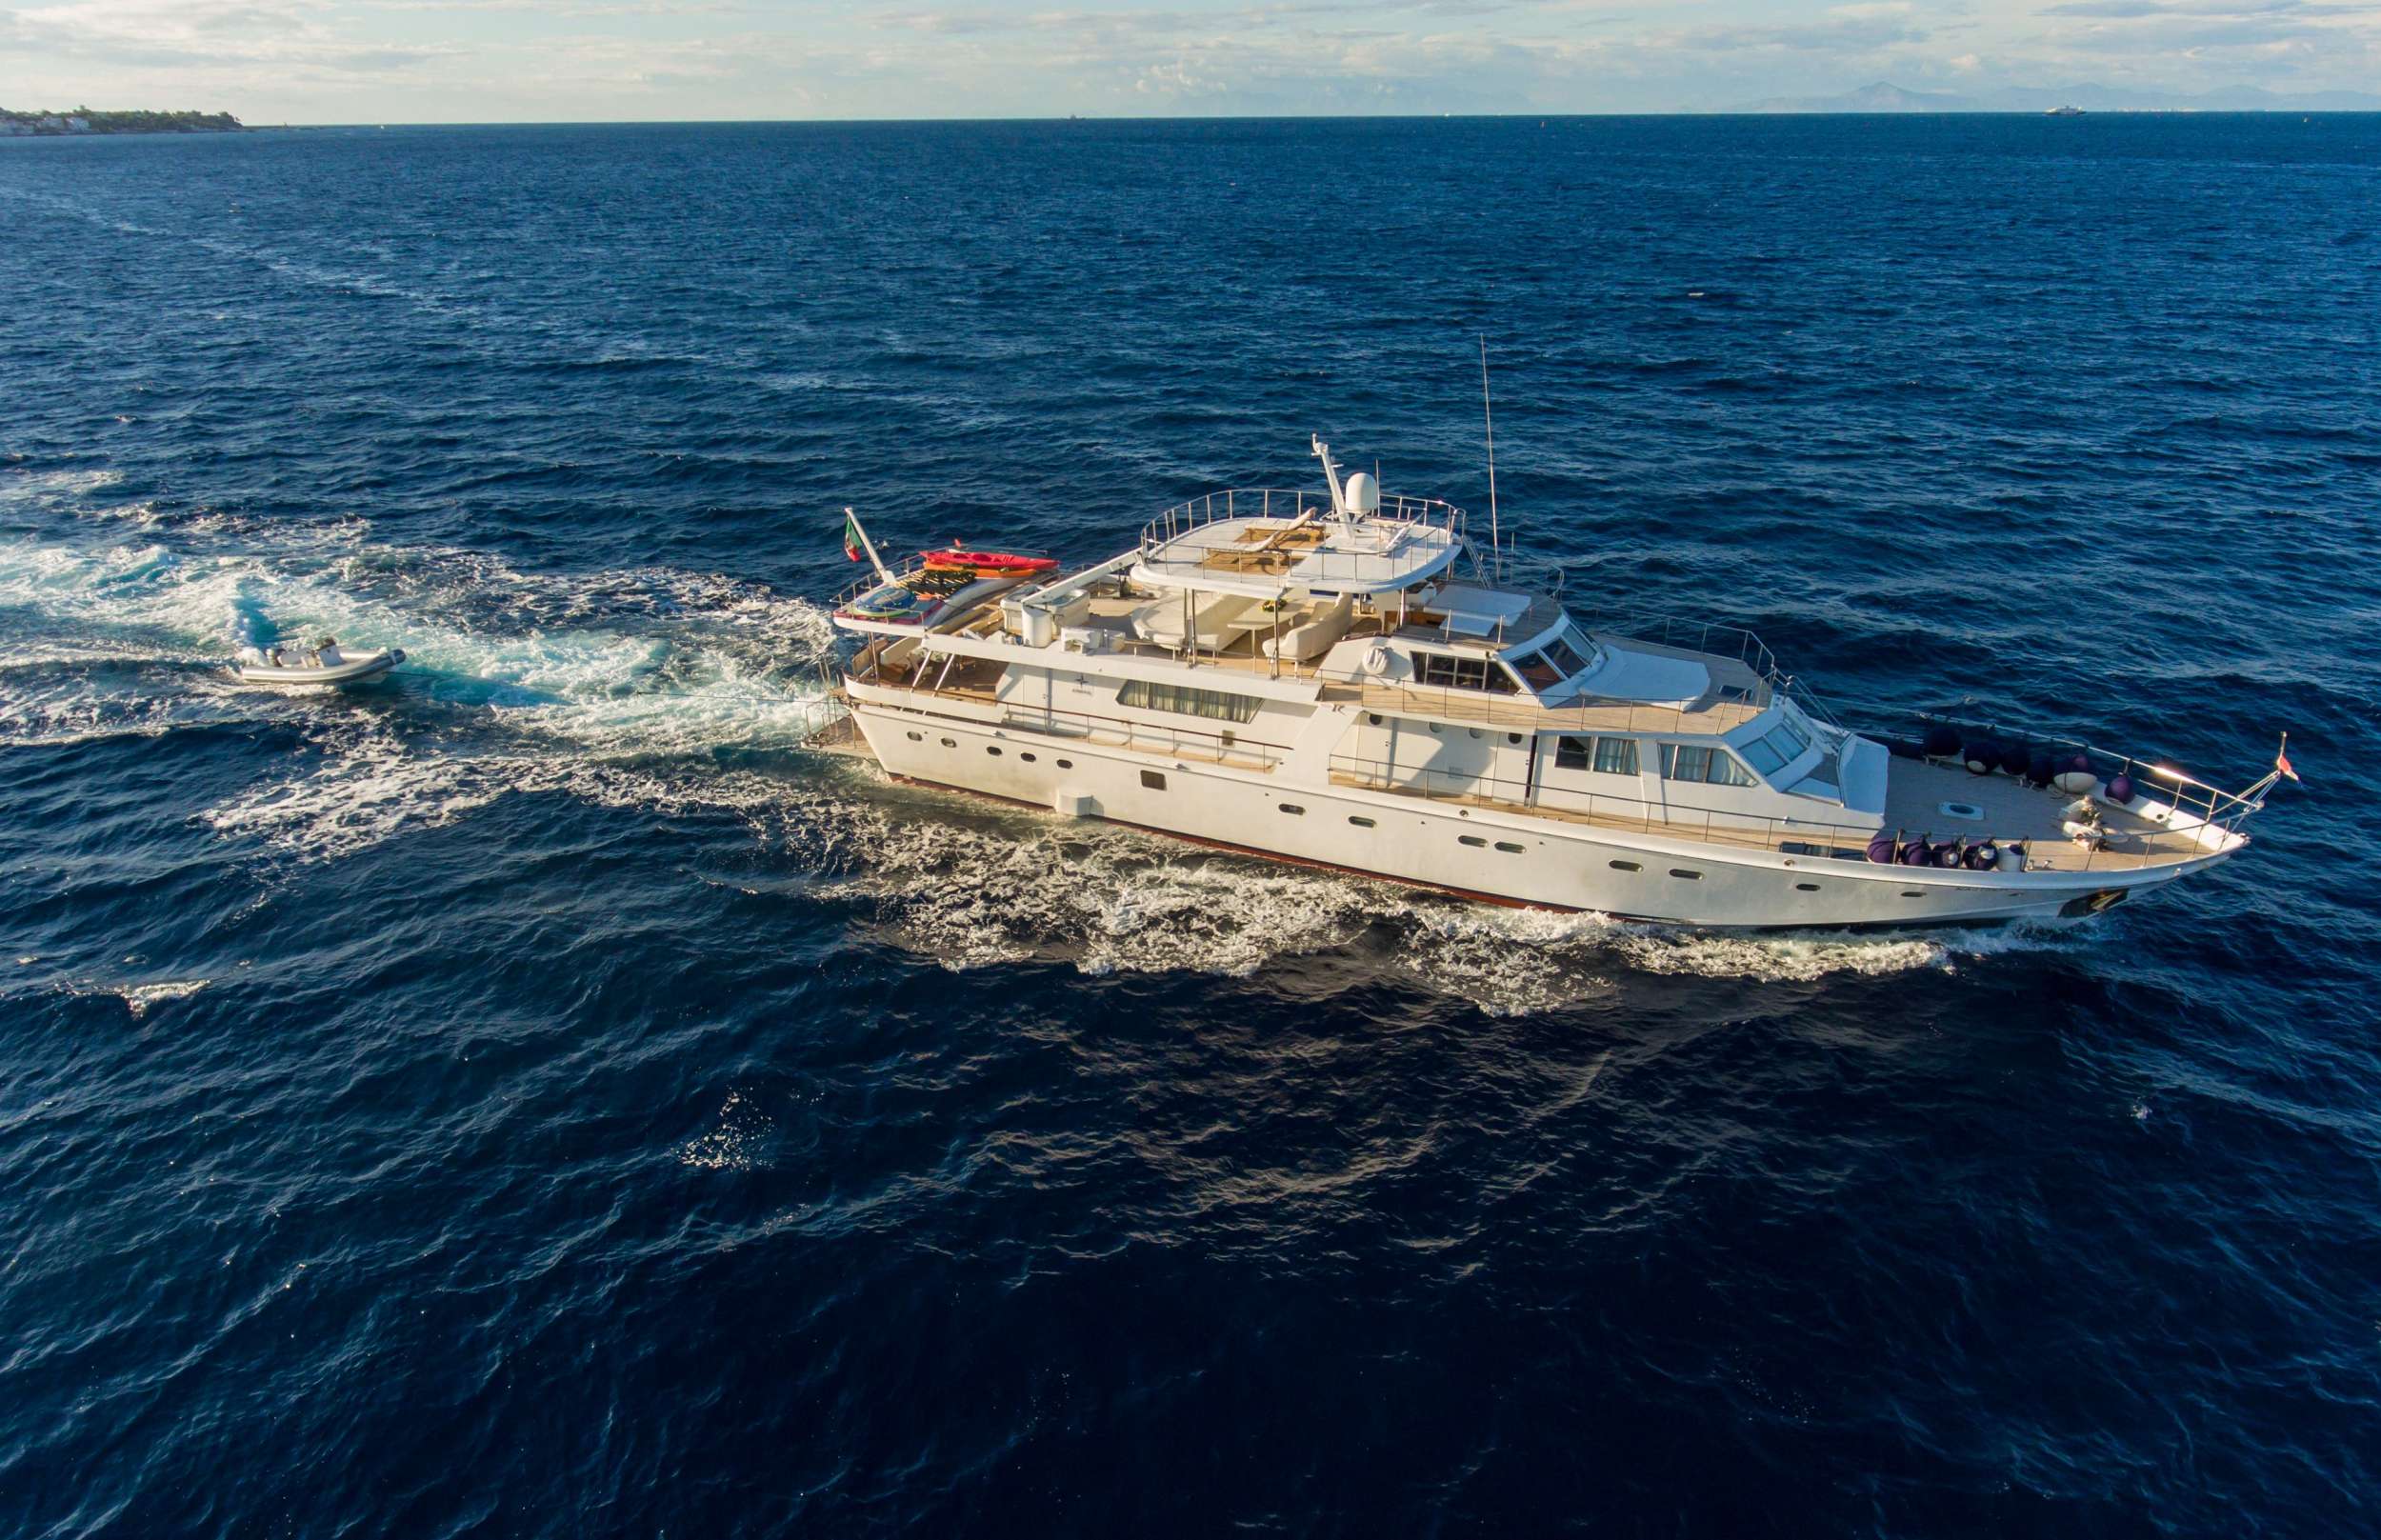 nafisa - Yacht Charter Bocca di Magra & Boat hire in Fr. Riviera & Tyrrhenian Sea 1